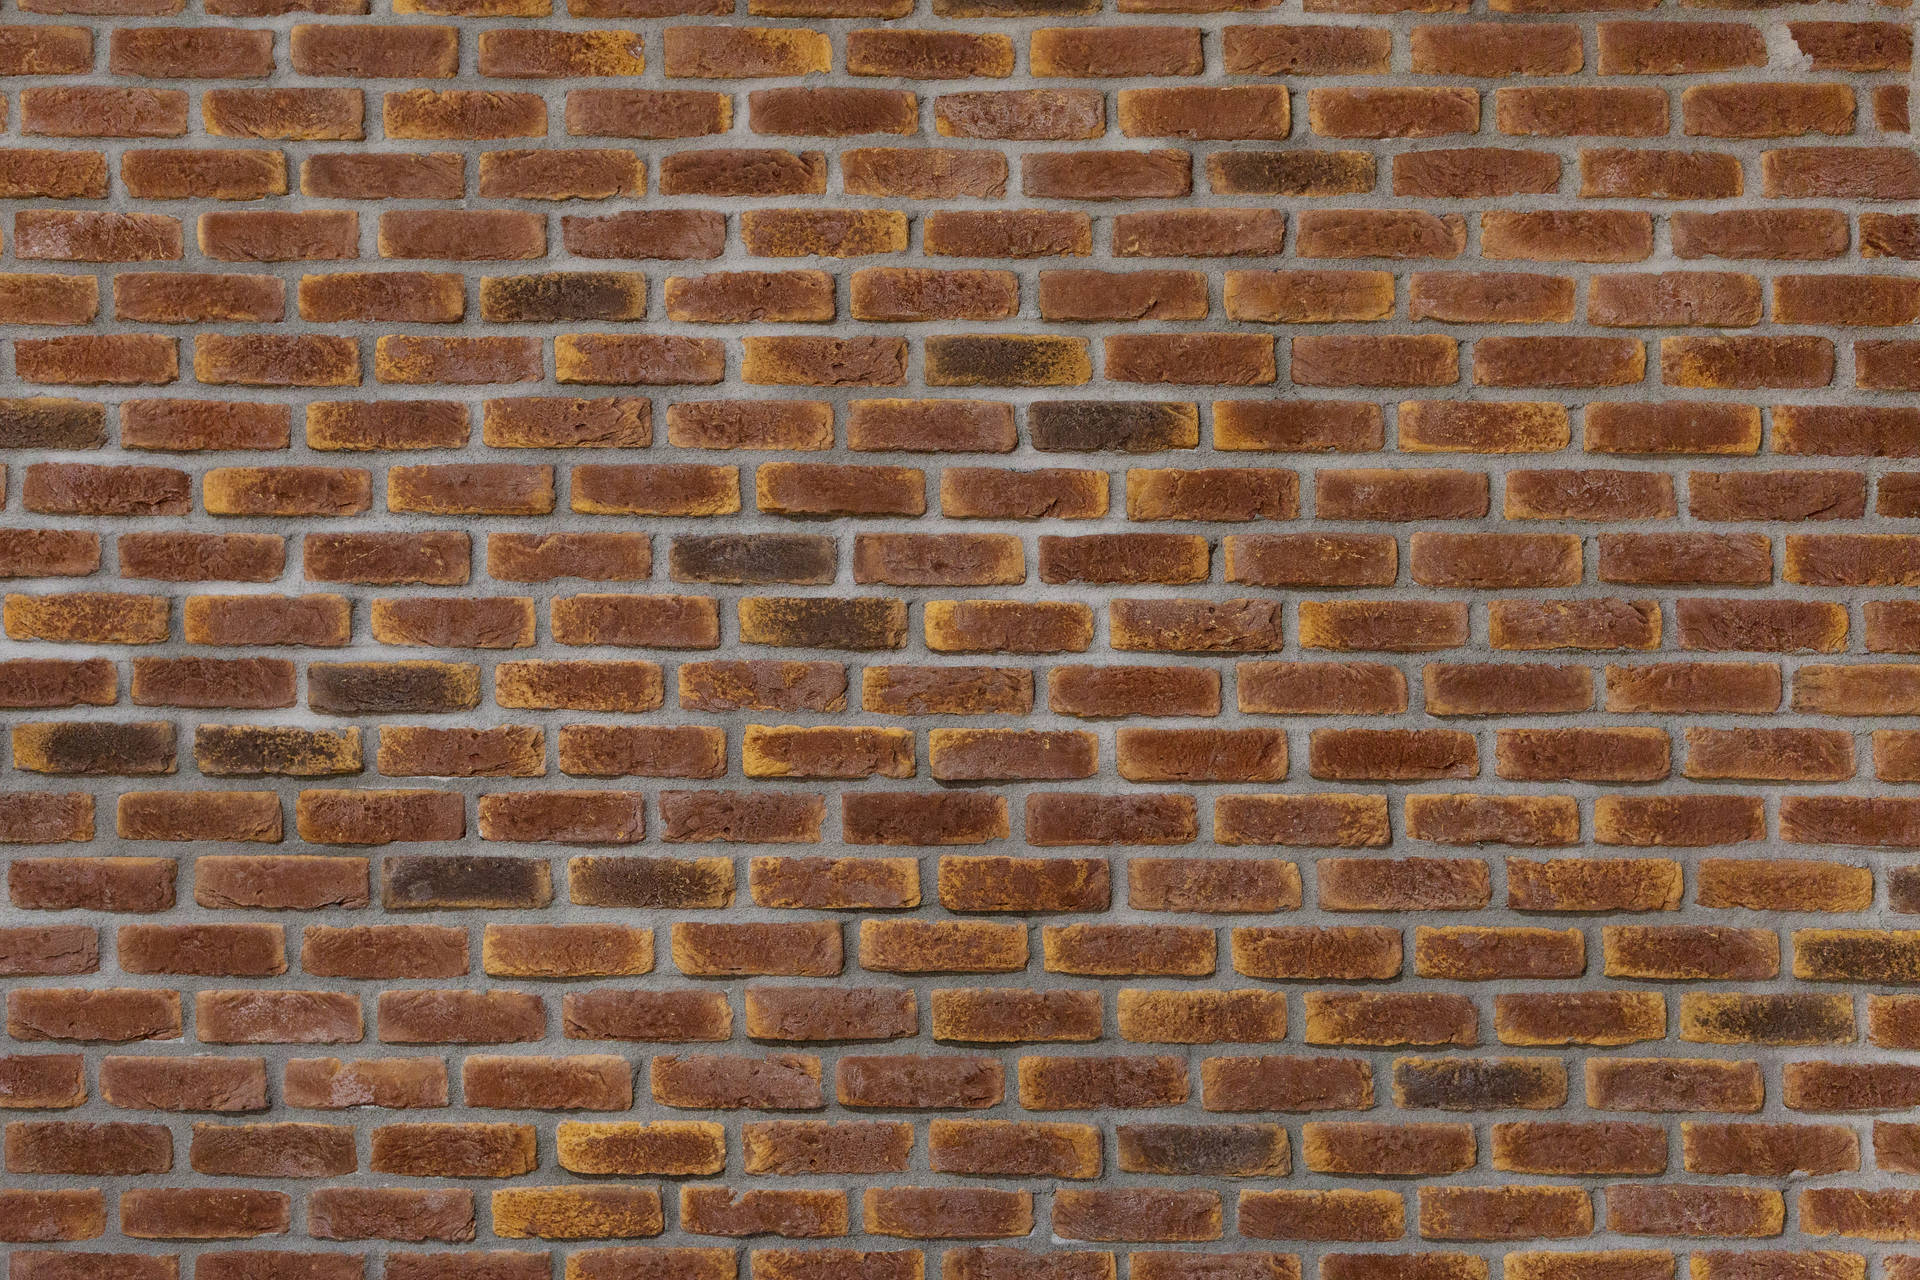 Brick 5472X3648 wallpaper